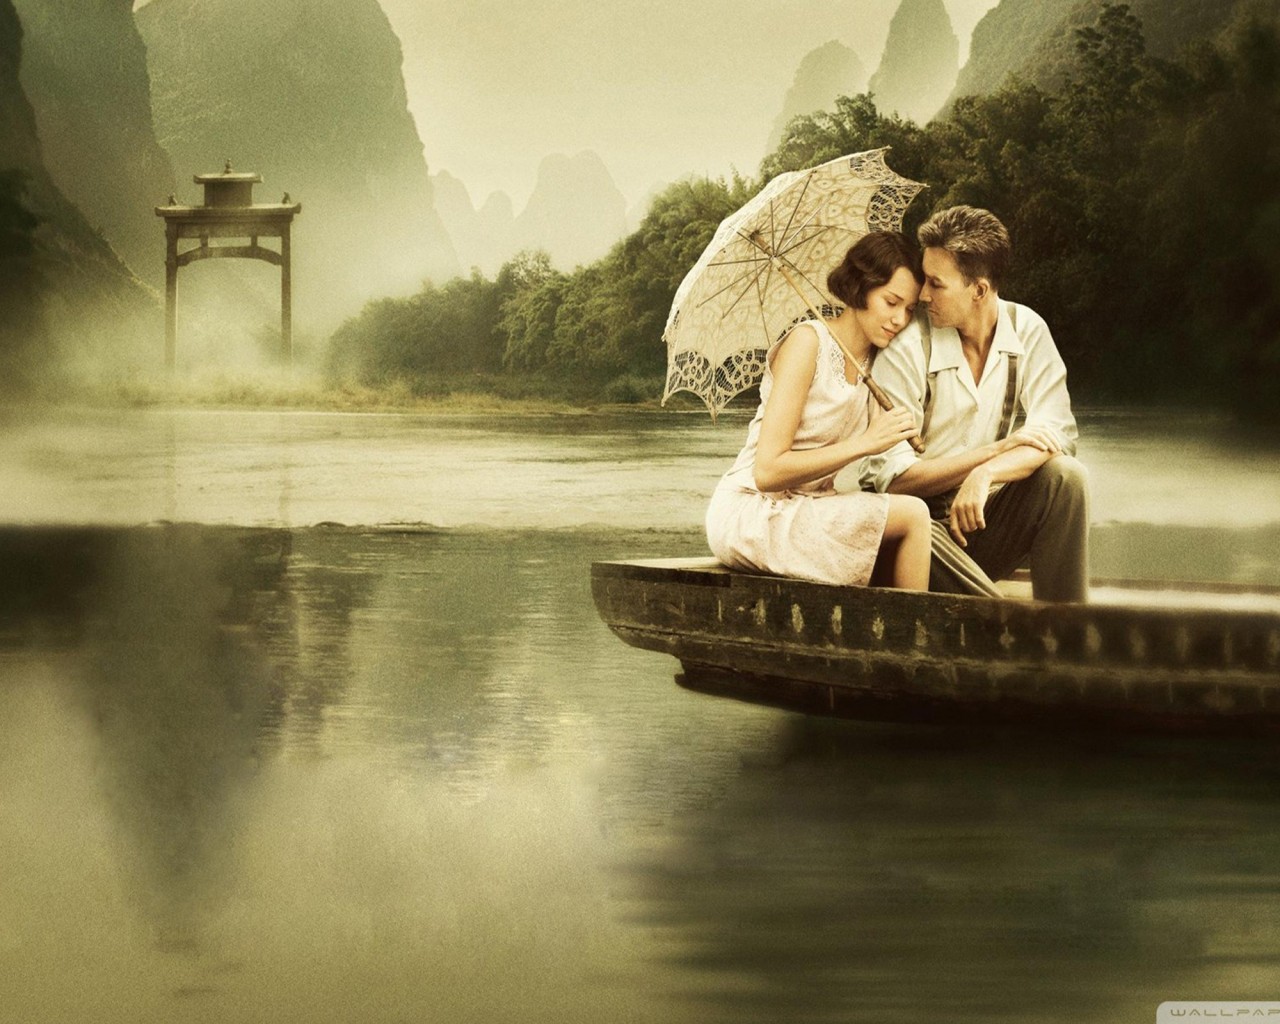 historia de amor fondo de pantalla,romance,fotografía,amor,paisaje,río